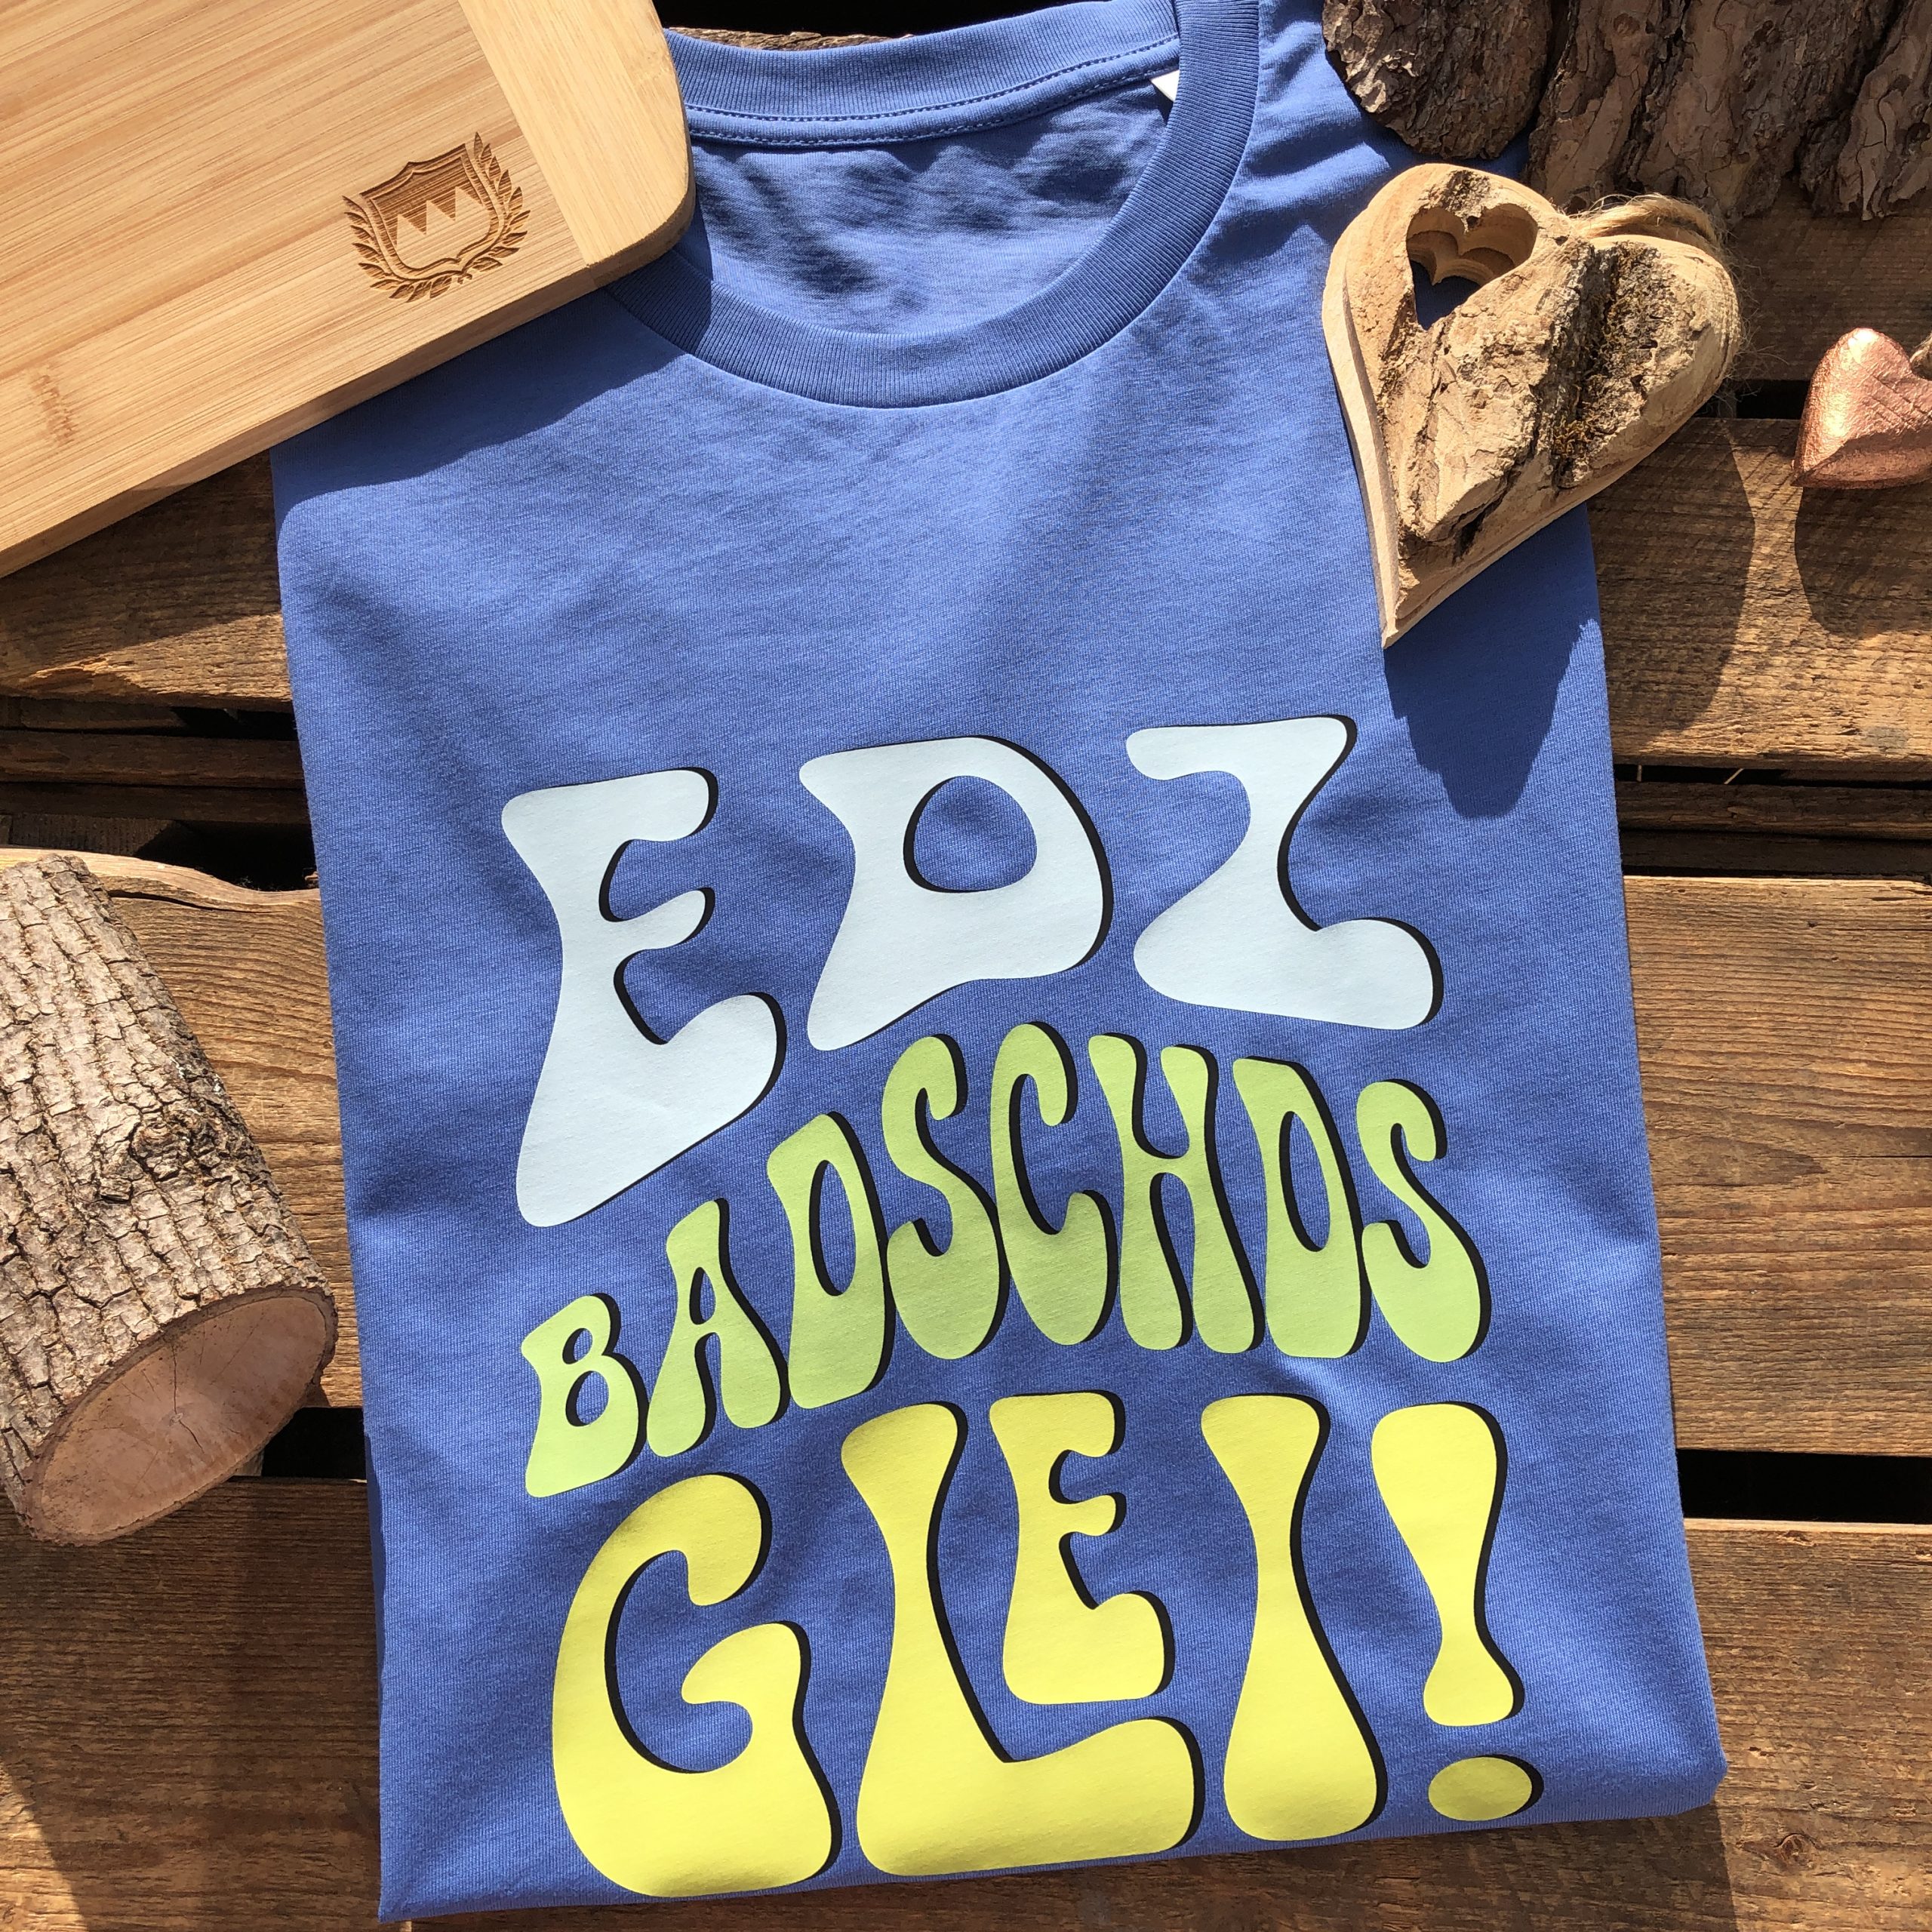 Edz Badschds Glei T-Shirt Frankenstyle